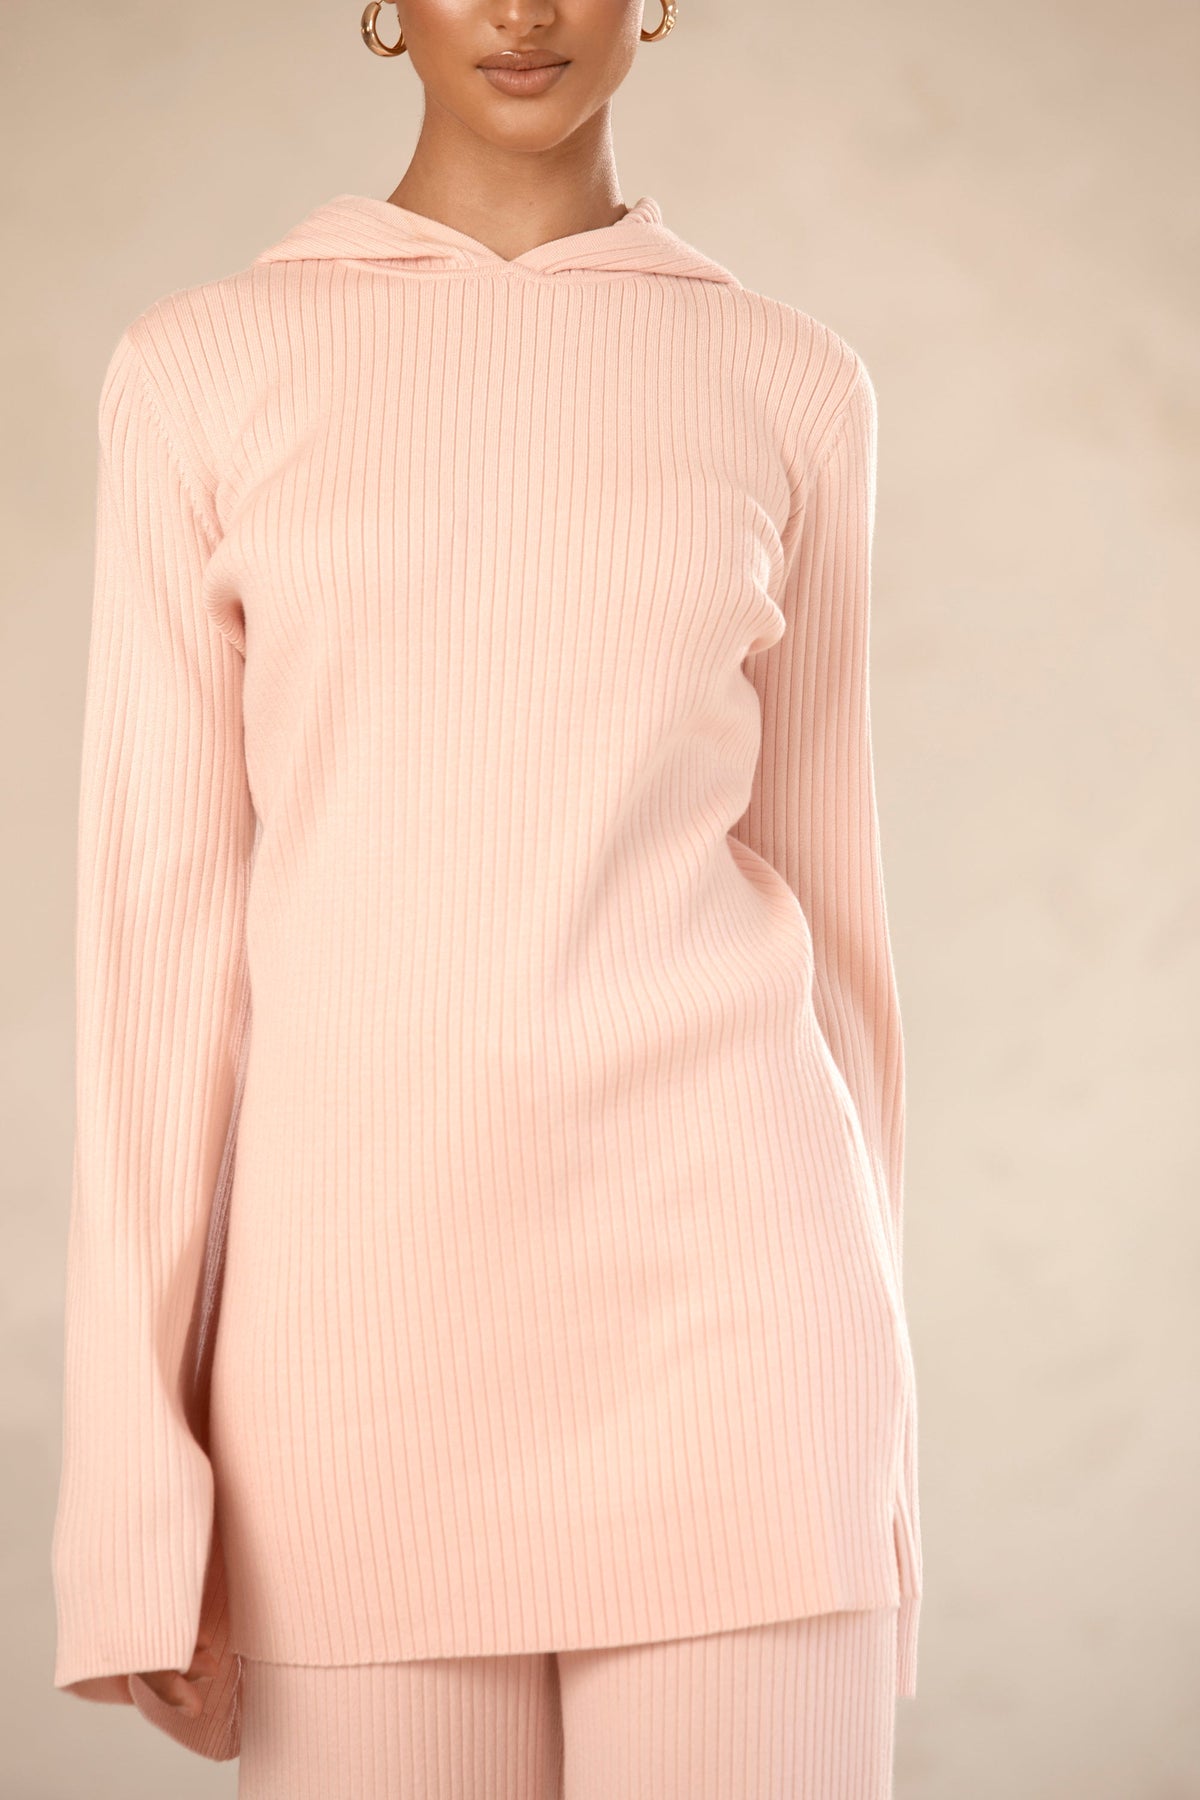 Hooded Knit Bell Sleeve Top - Pink Clay saigonodysseyhotel 